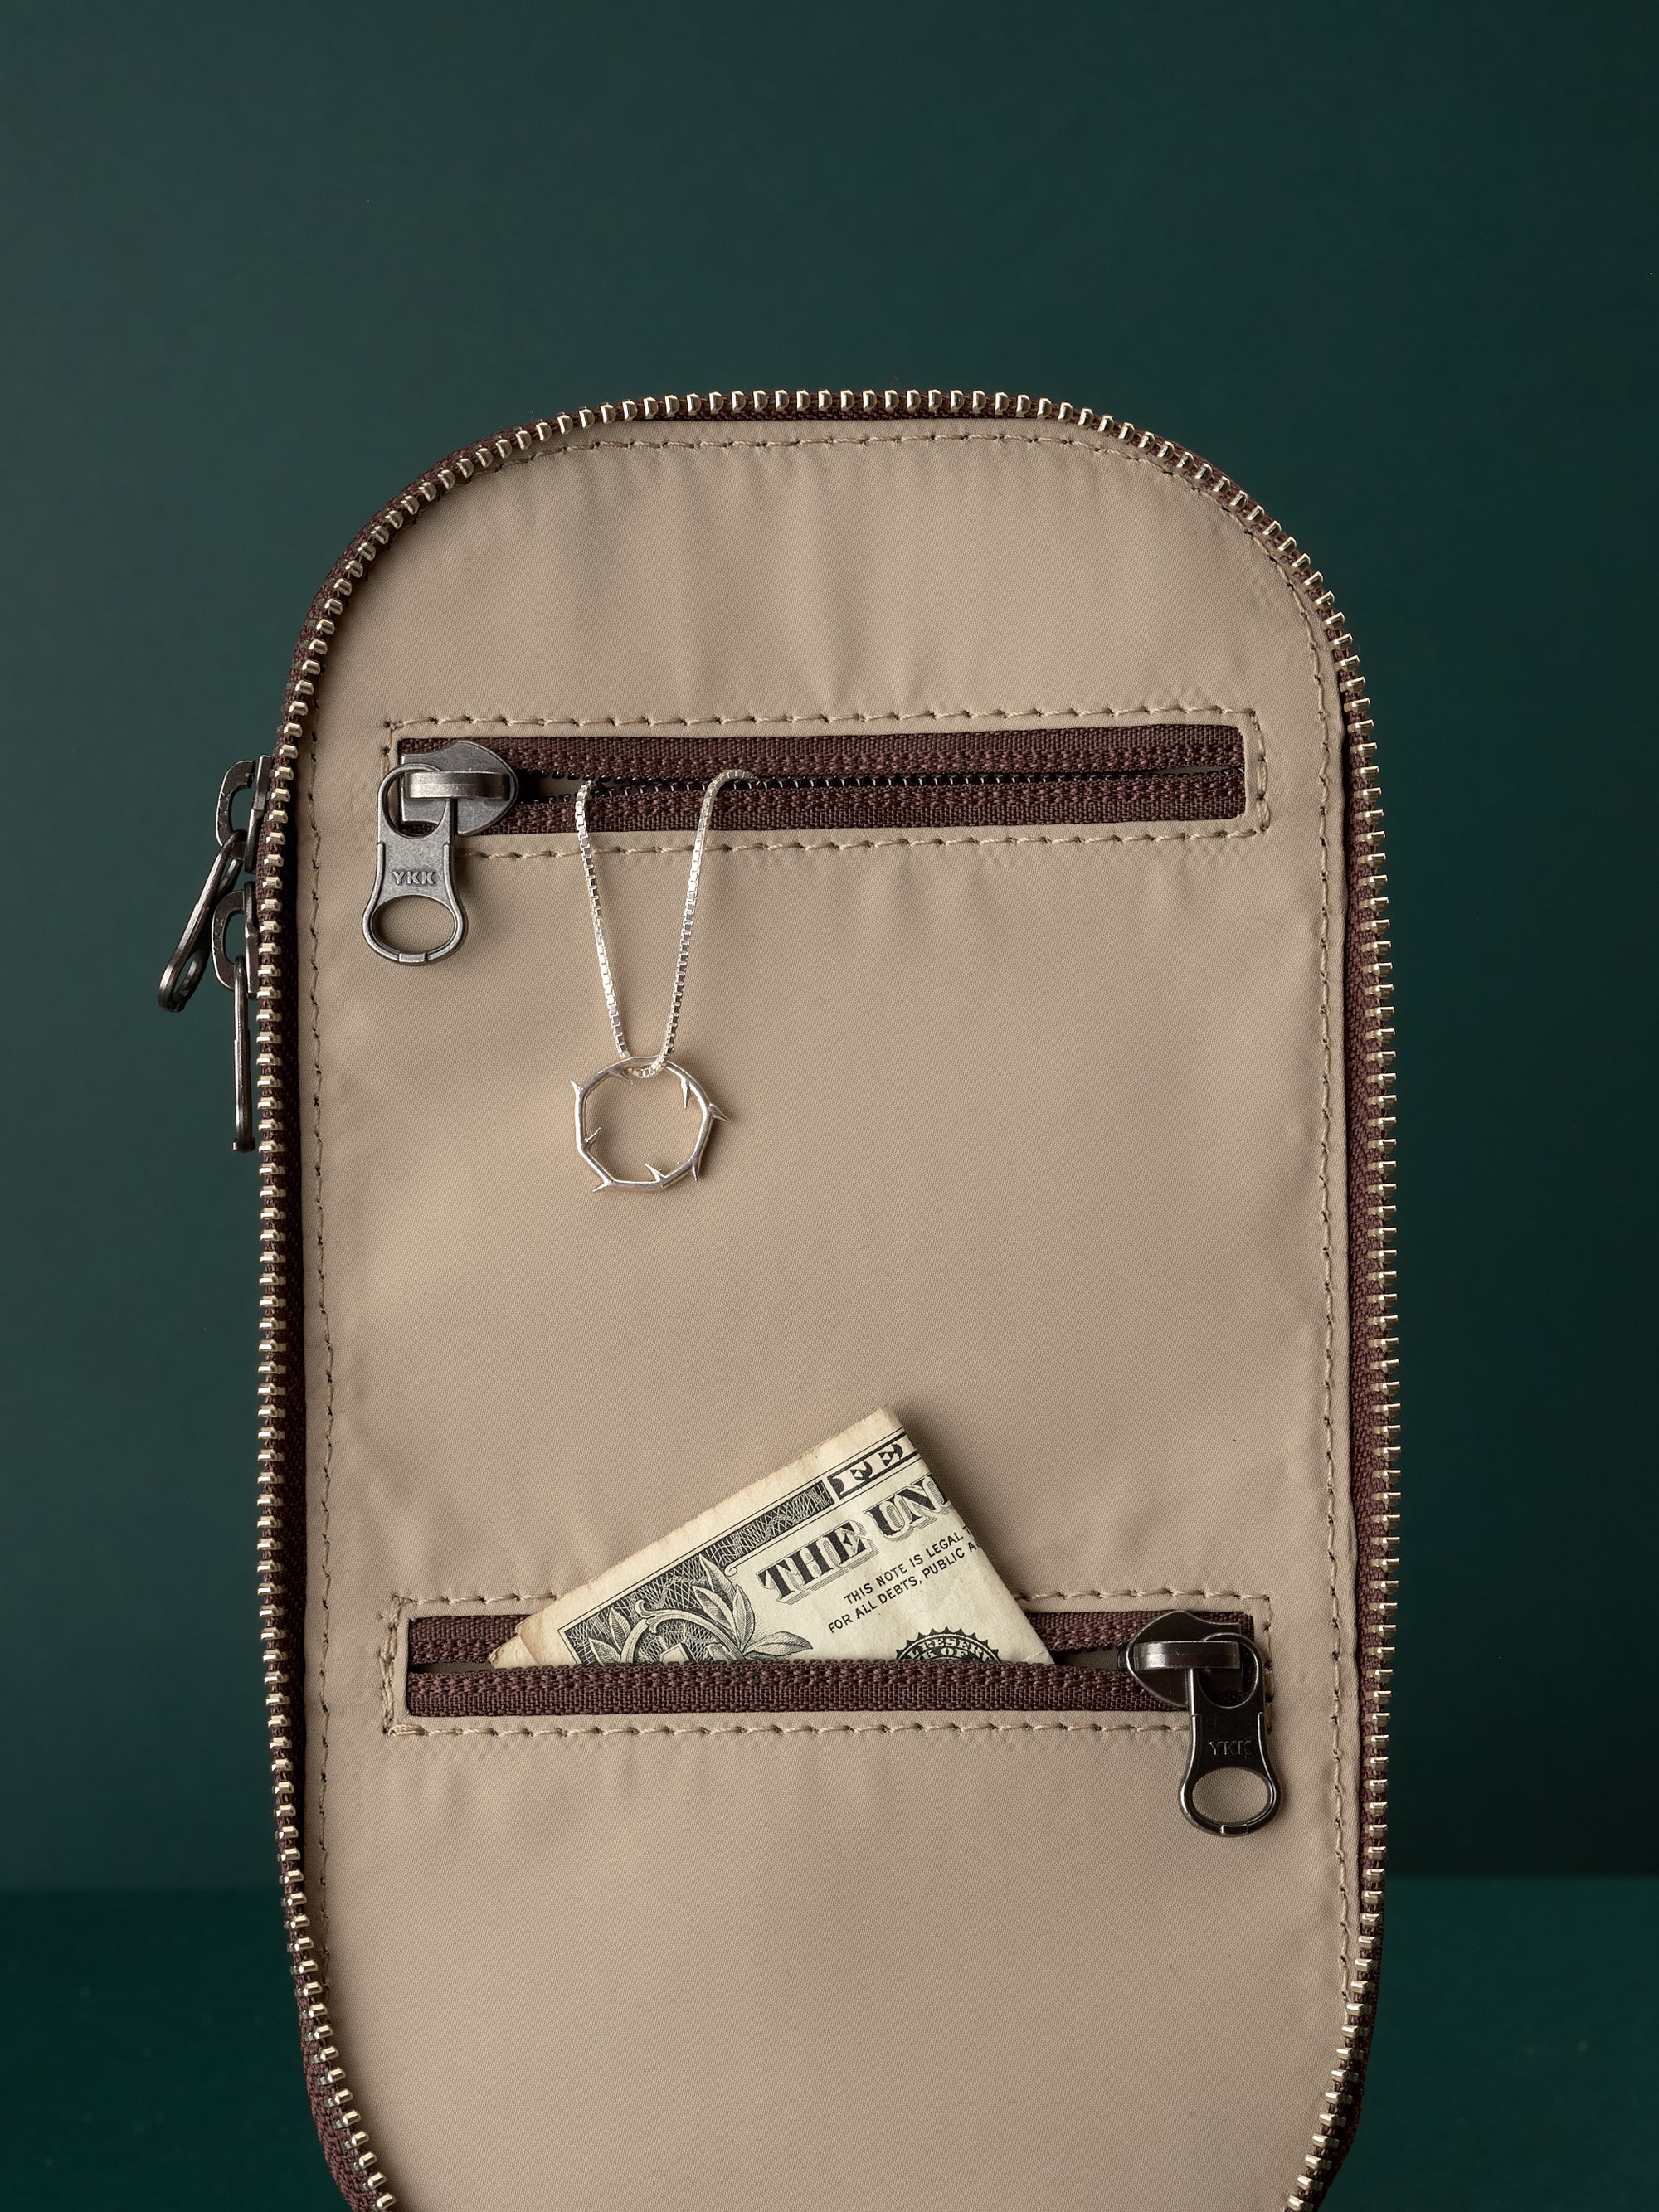 Interior pocket dopp travel kit by Capra Leather